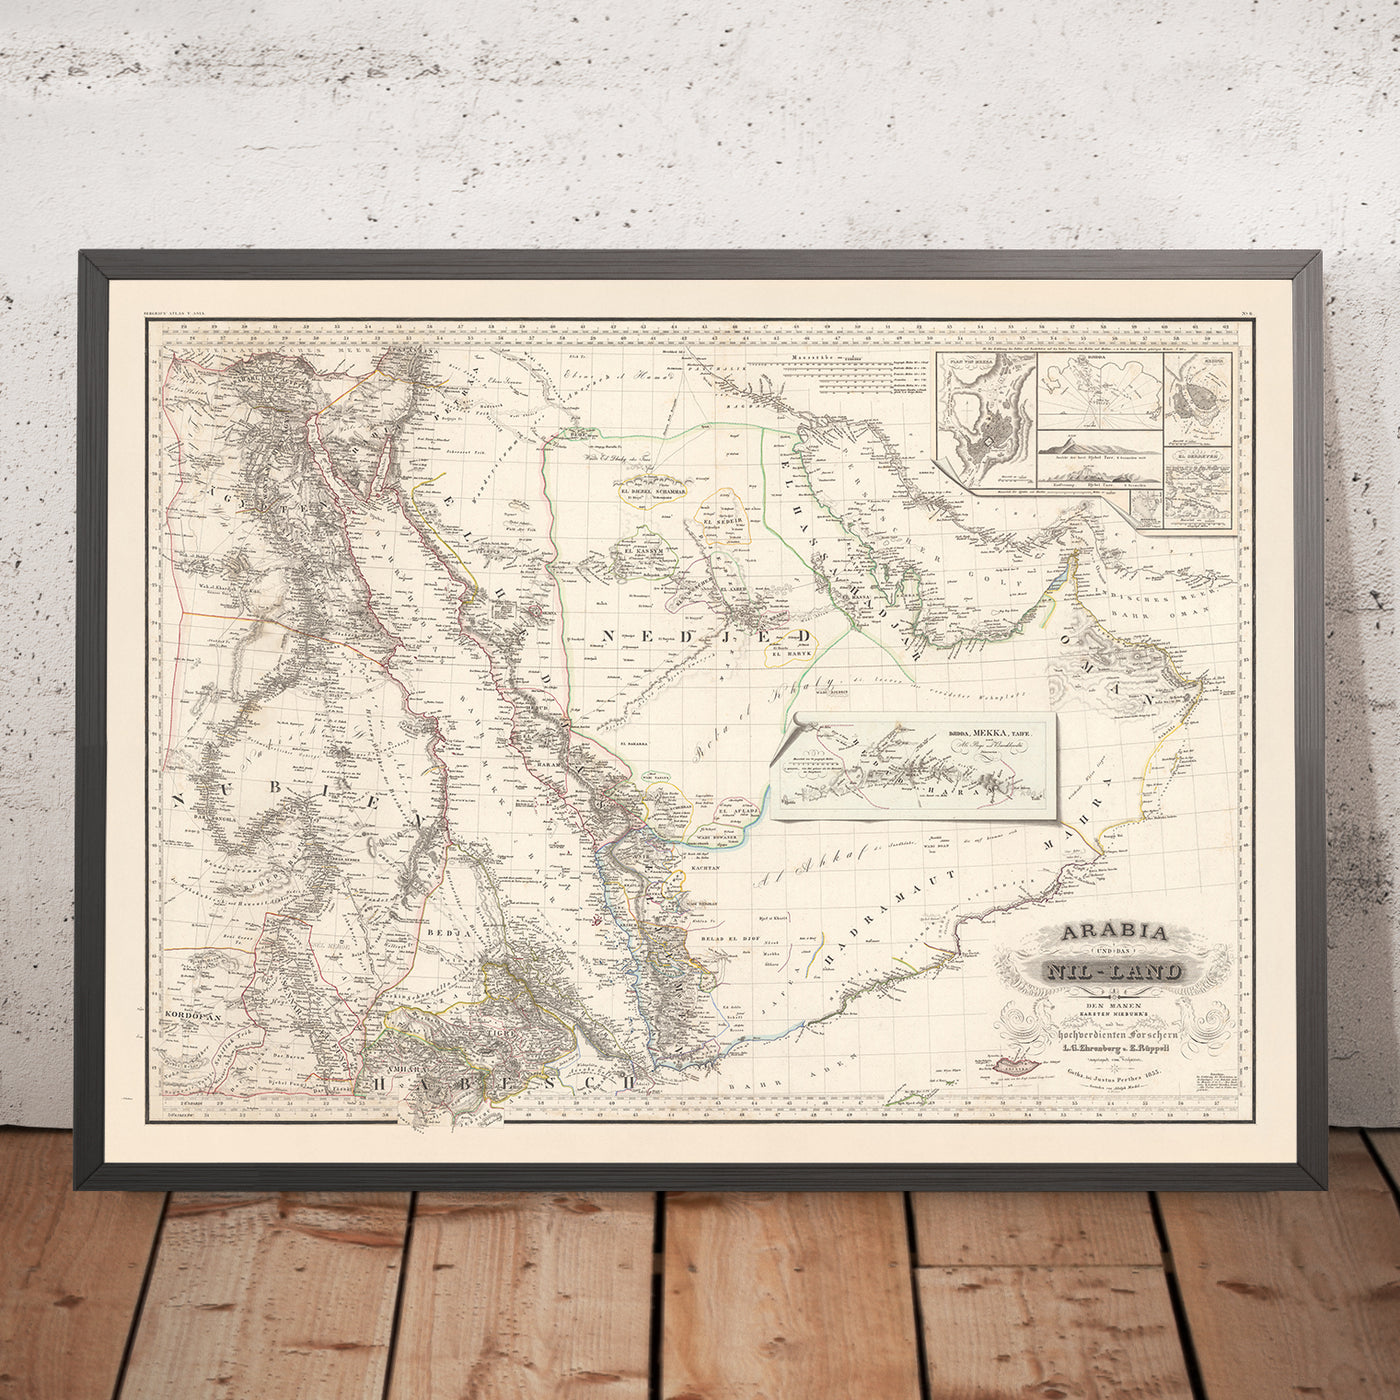 Old Rare Map of Arabian Peninsula by Perthes, 1835: First Map of Dubai, Kuwait, Abu Dhabi; Mecca, Red Sea